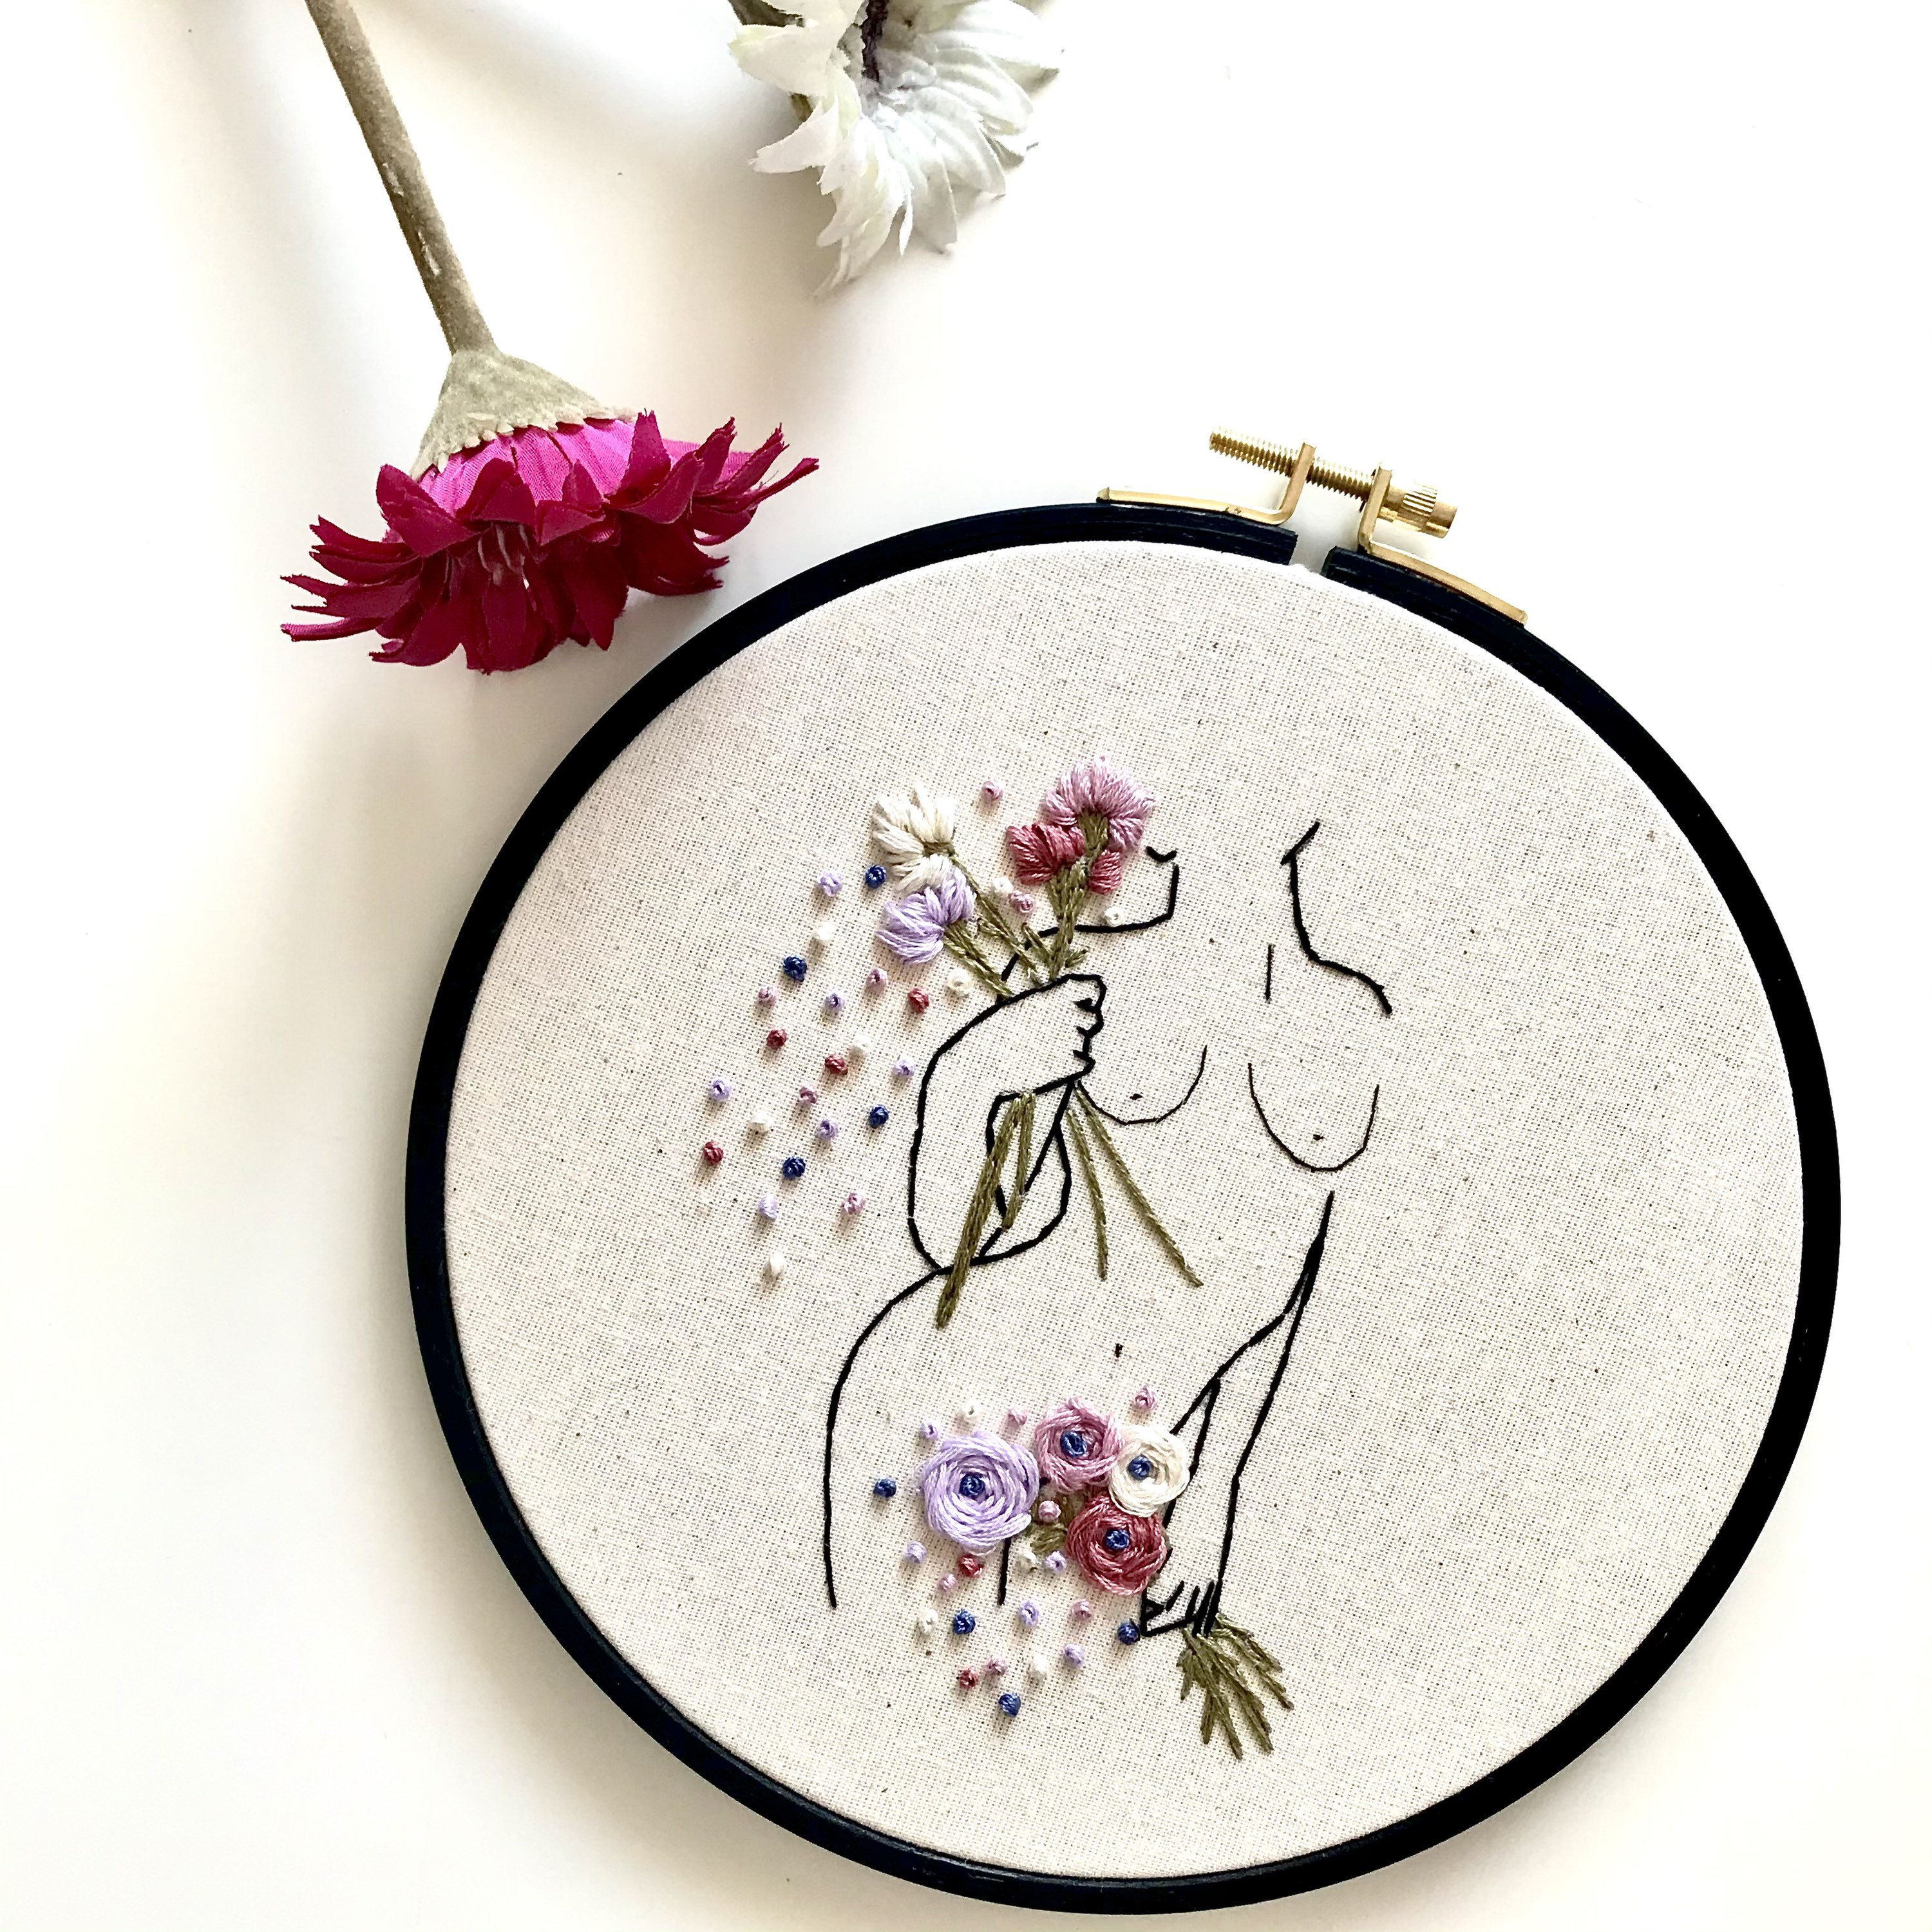 Naked Lady / Embroidery Kit / Needle Craft Kit / Female Hoop Art / Feminist  Embroidery / Floral Line Art 